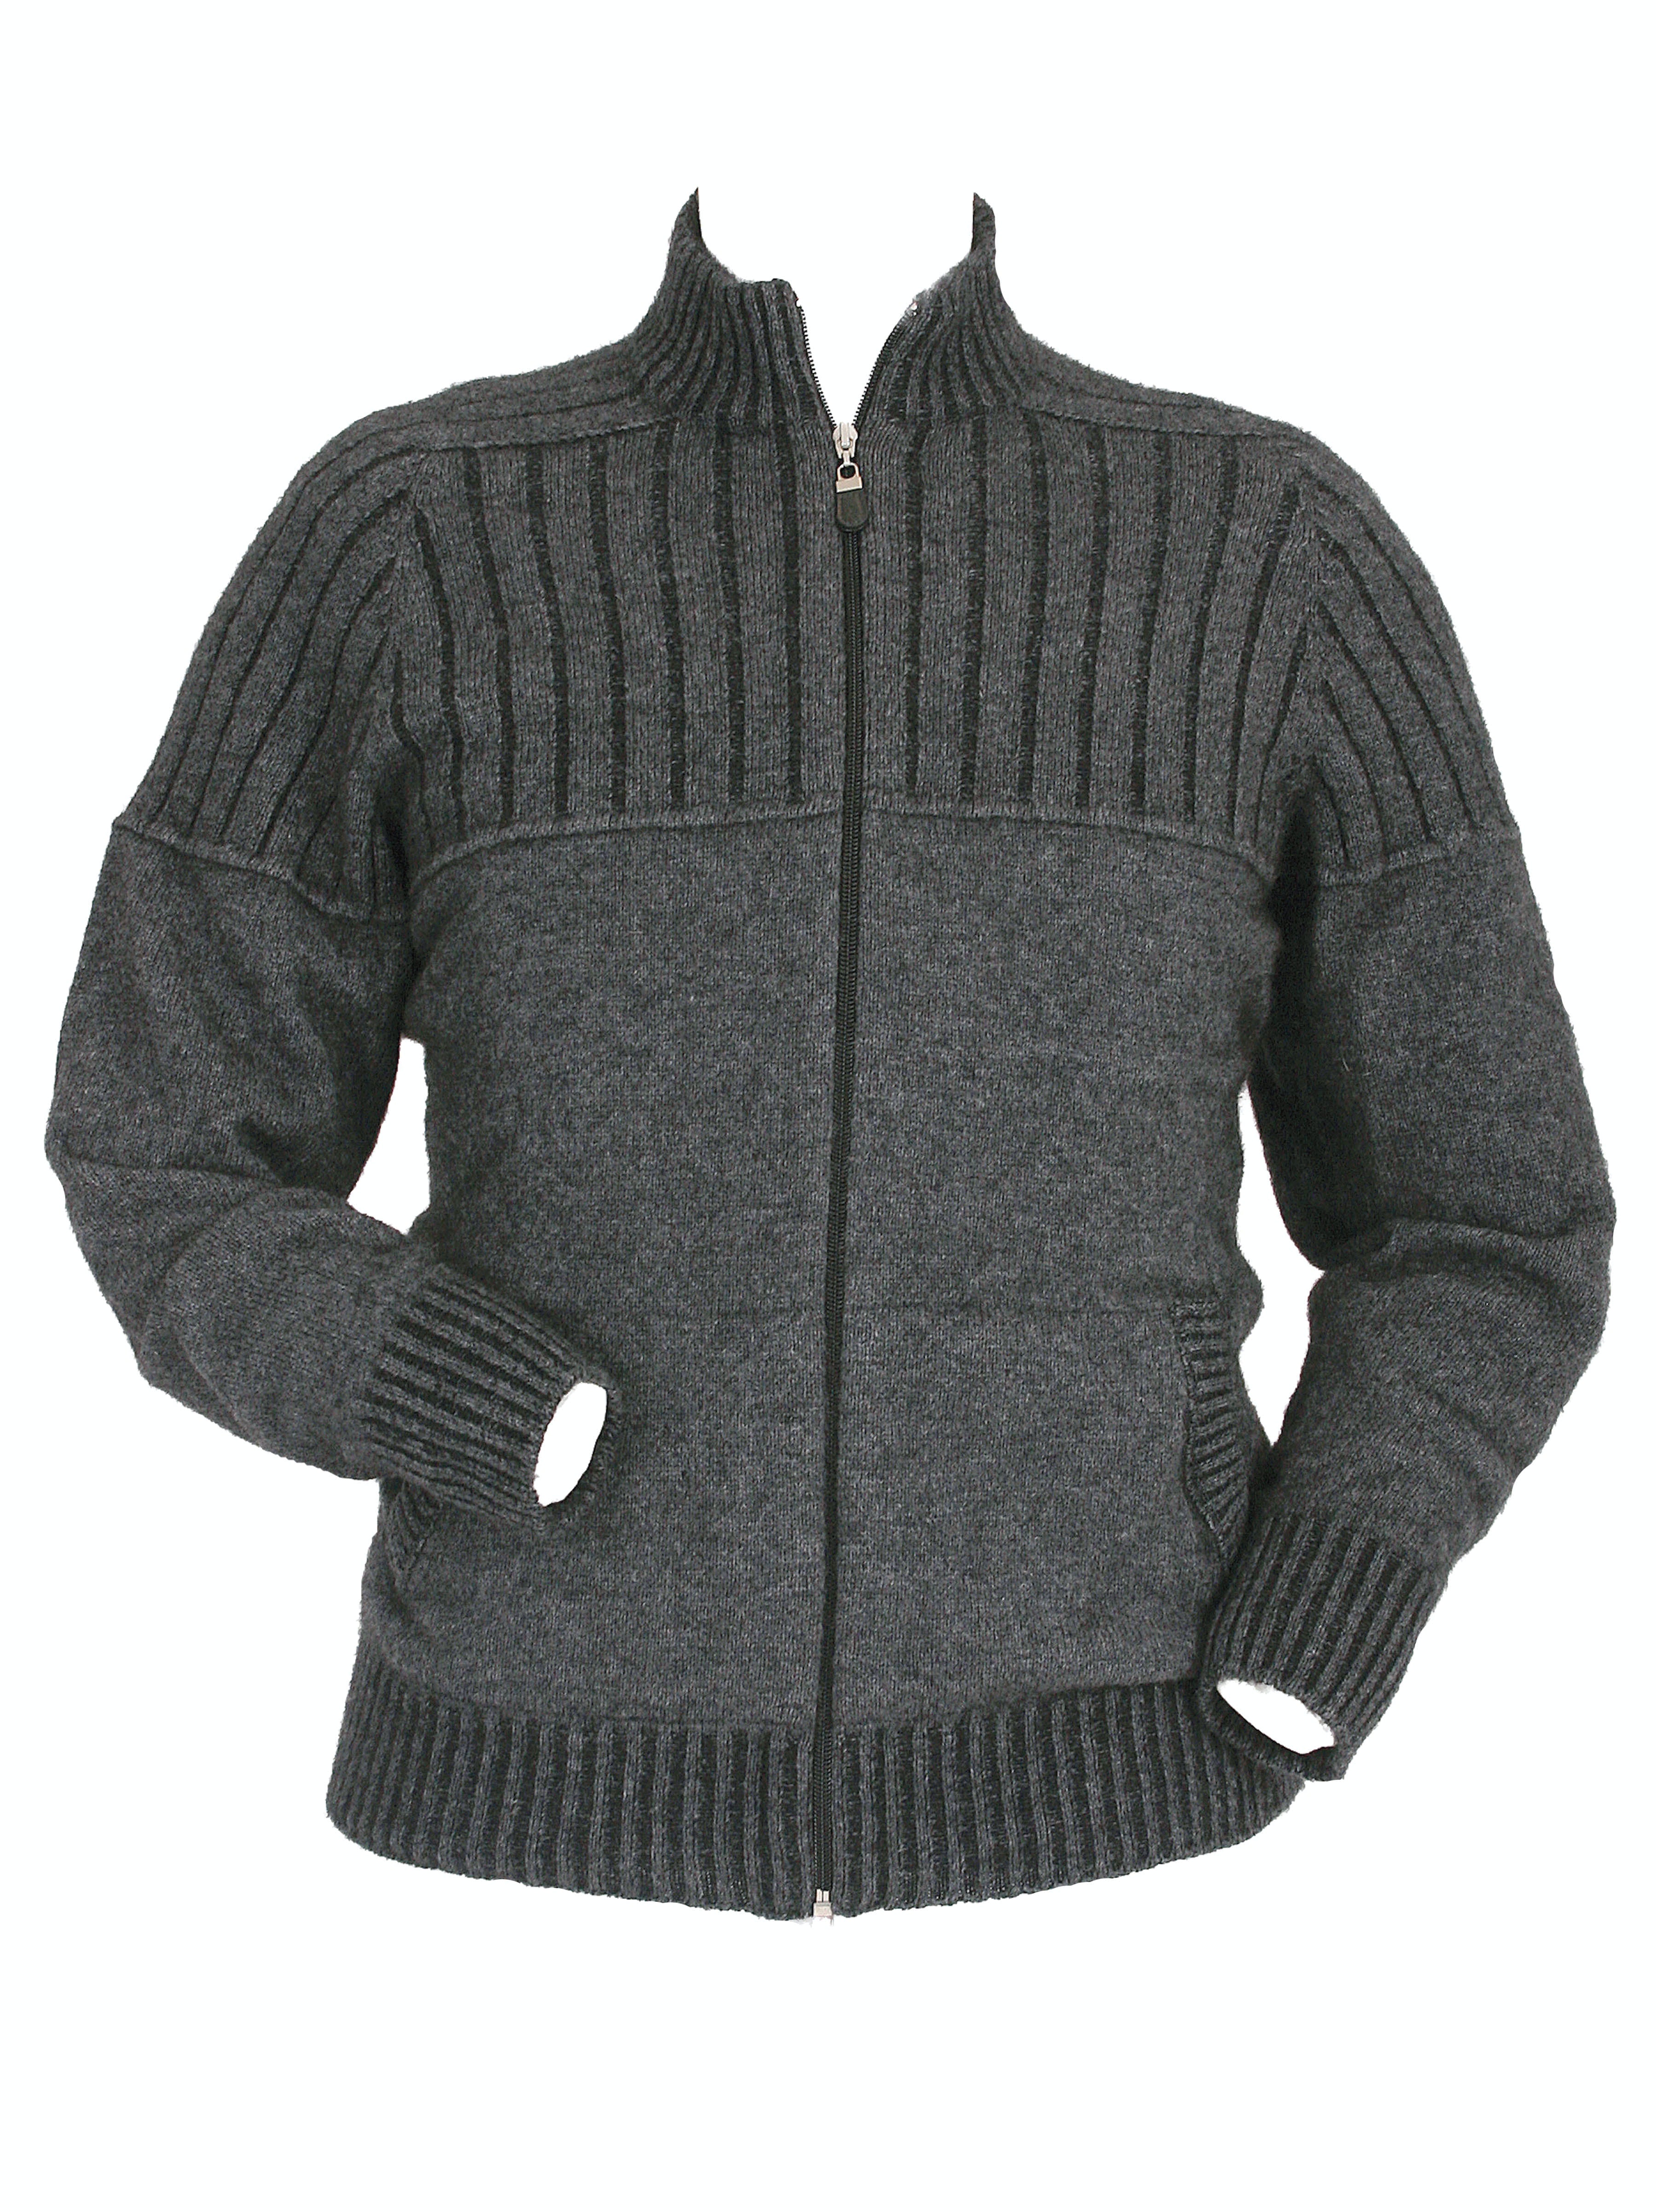 Possum Merino Full Zip Jacket with Pockets - Lothlorian Knitwear